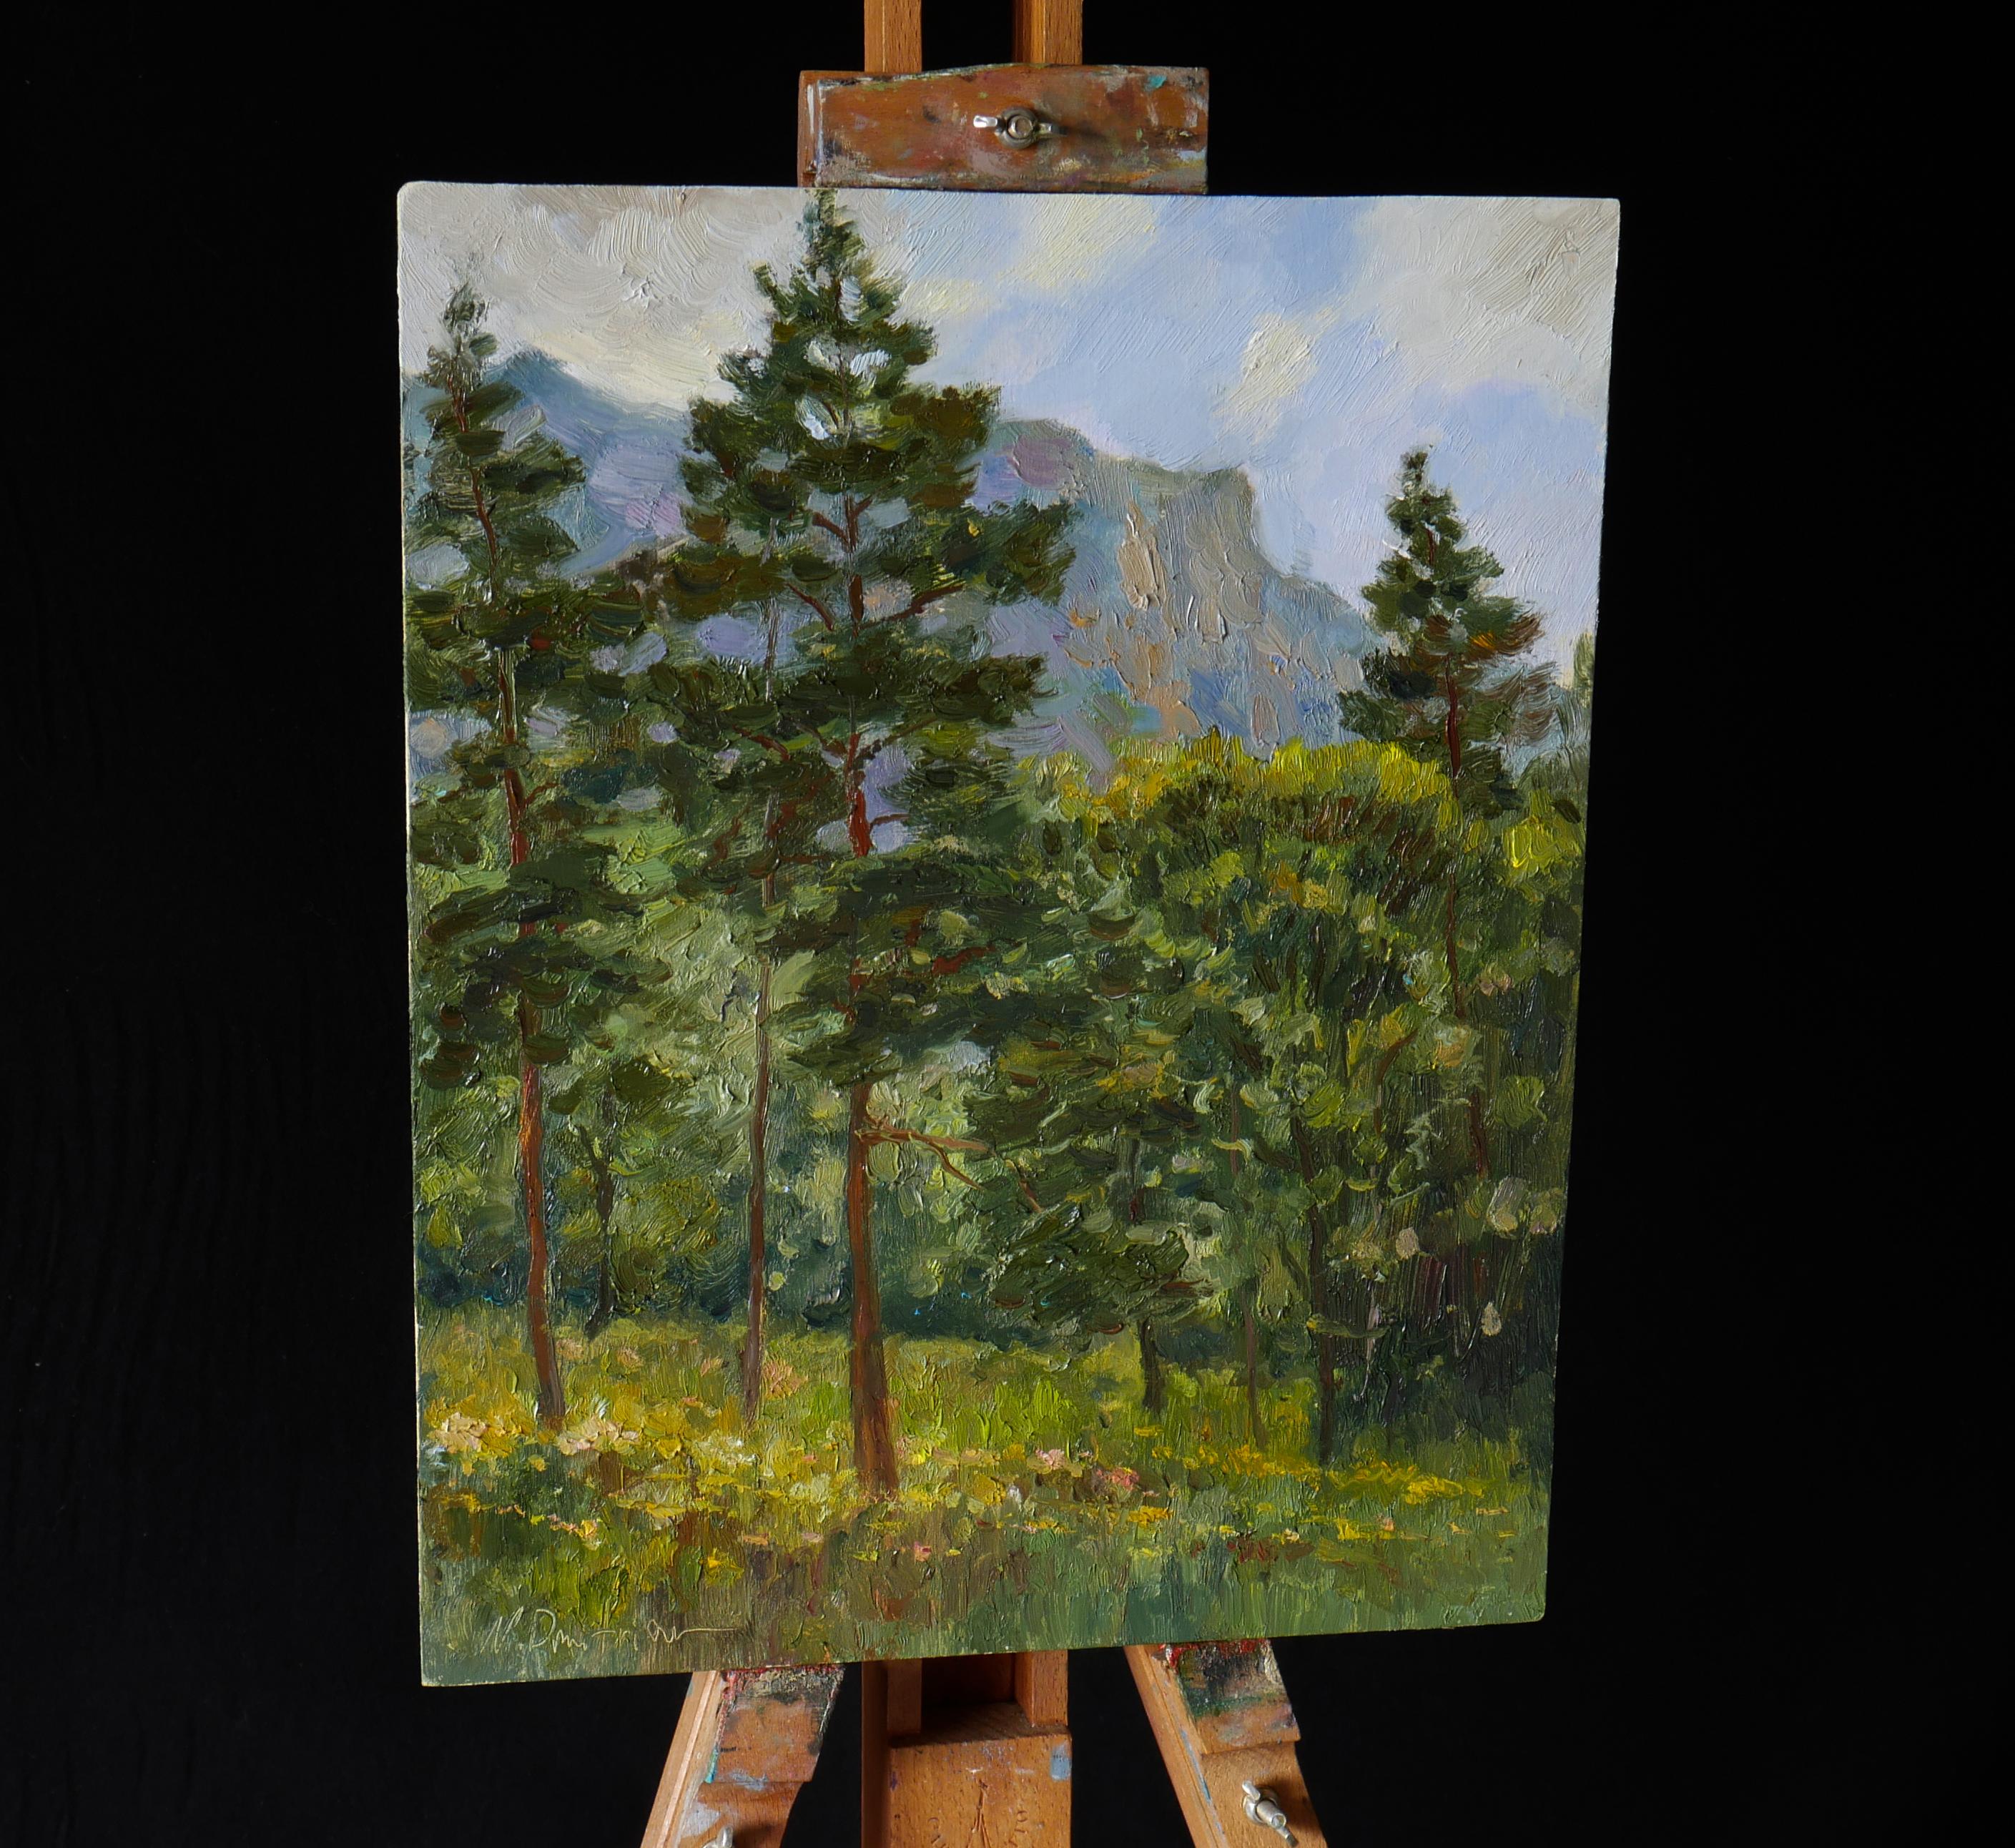 The evening in the mountains - Berge malen – Painting von Nikolay Dmitriev